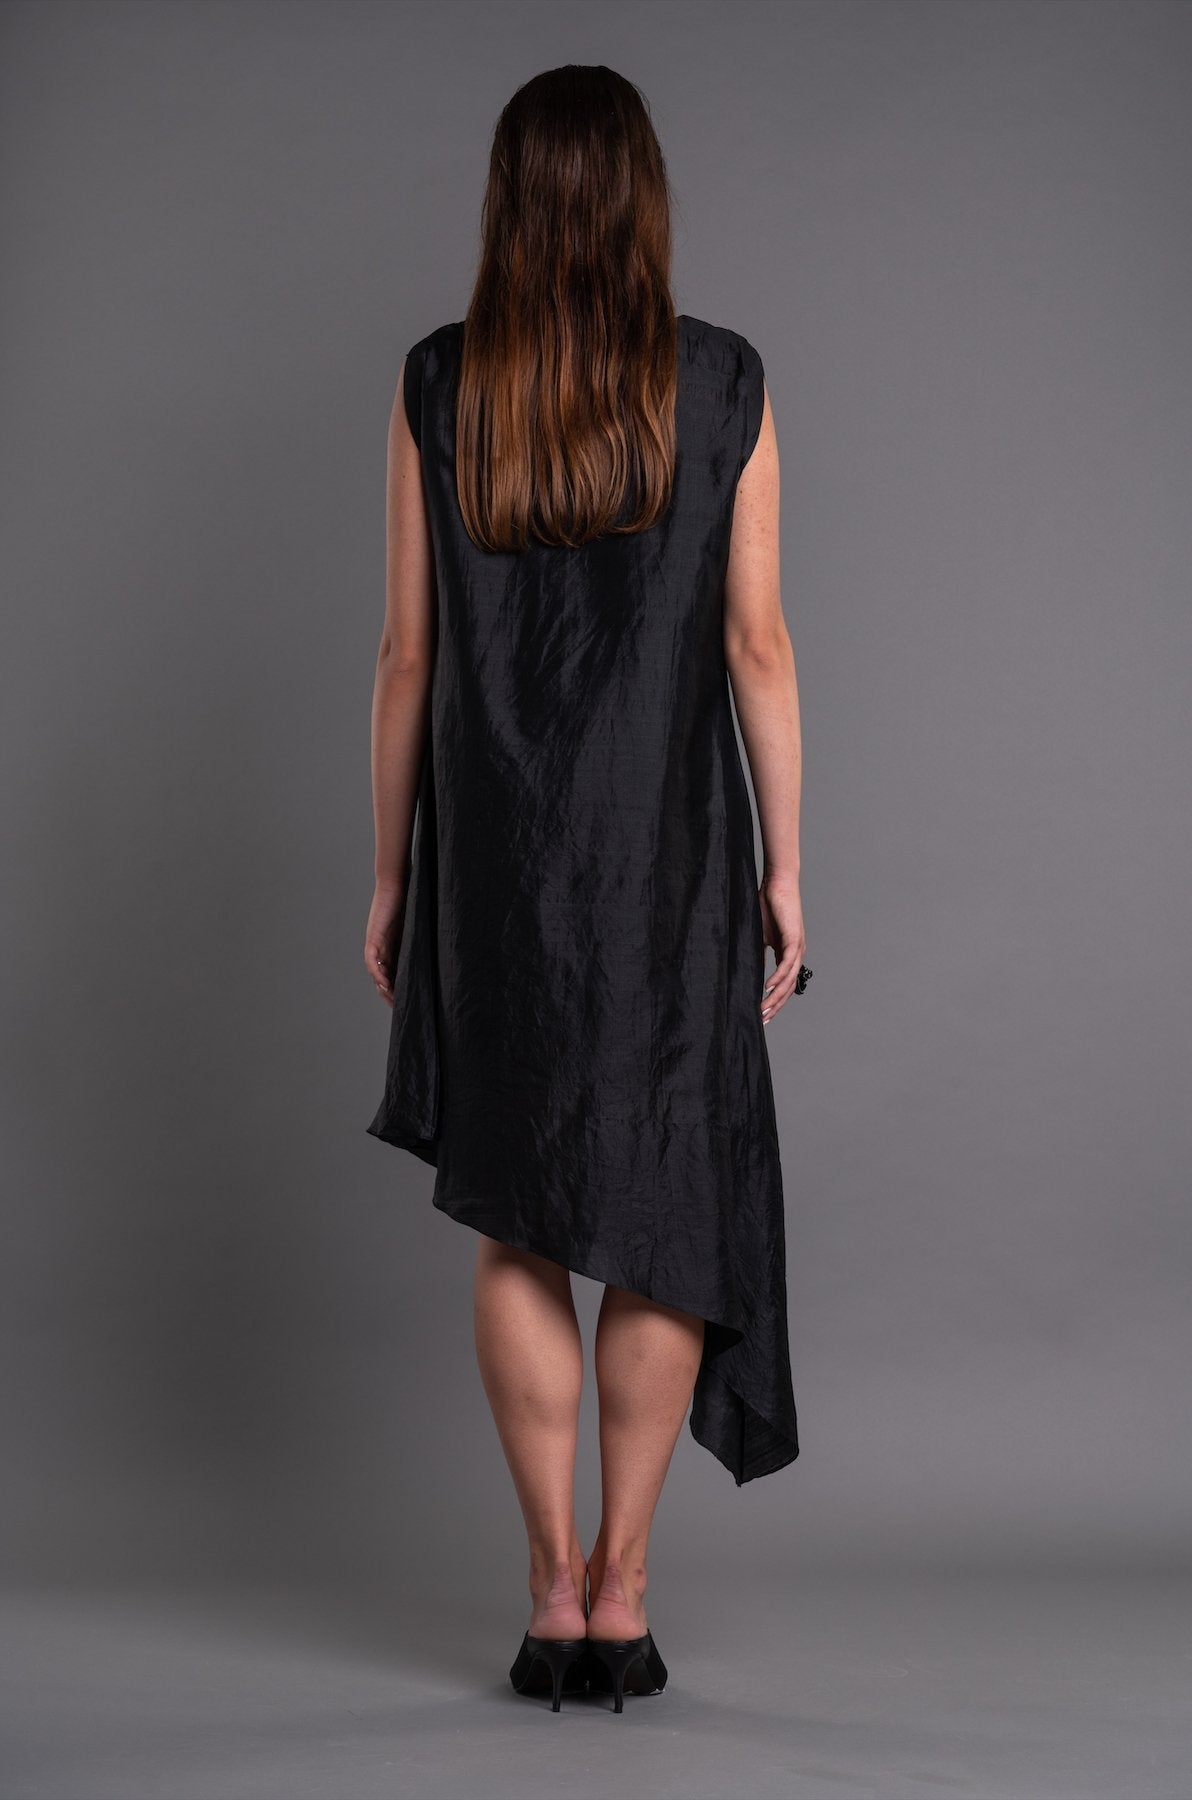 Asymmetrical Ruffled Dress - Dag Dai - The Clothing LoungeDag Dai